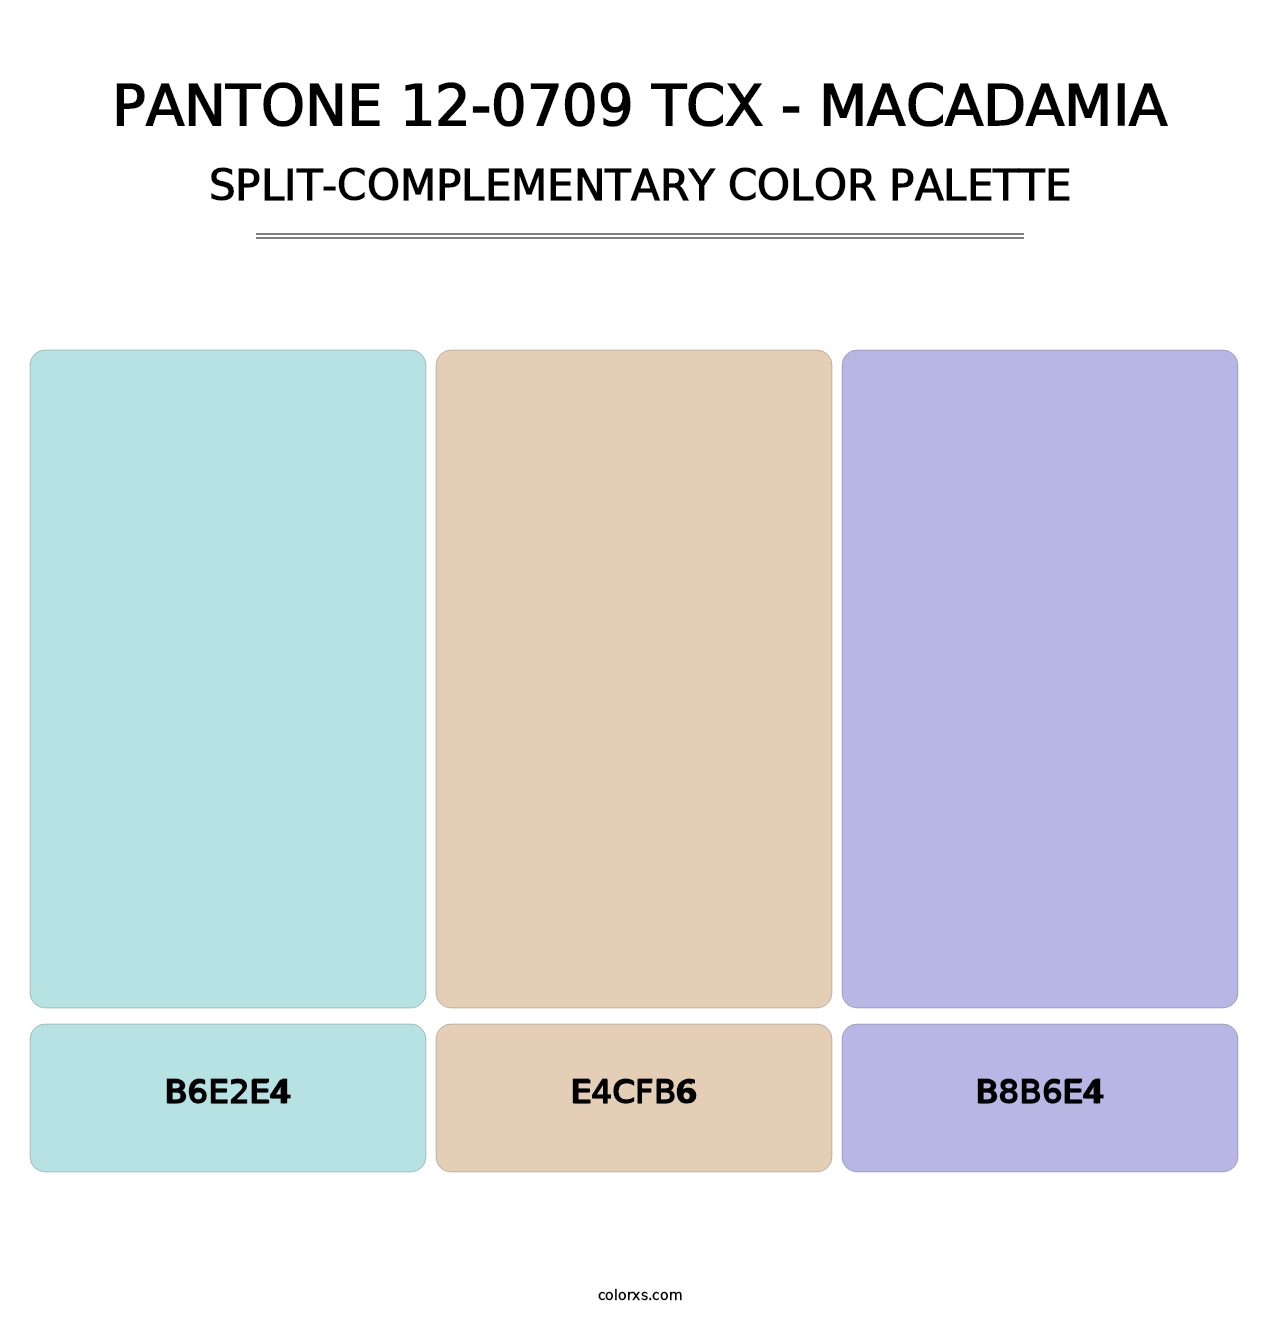 PANTONE 12-0709 TCX - Macadamia - Split-Complementary Color Palette